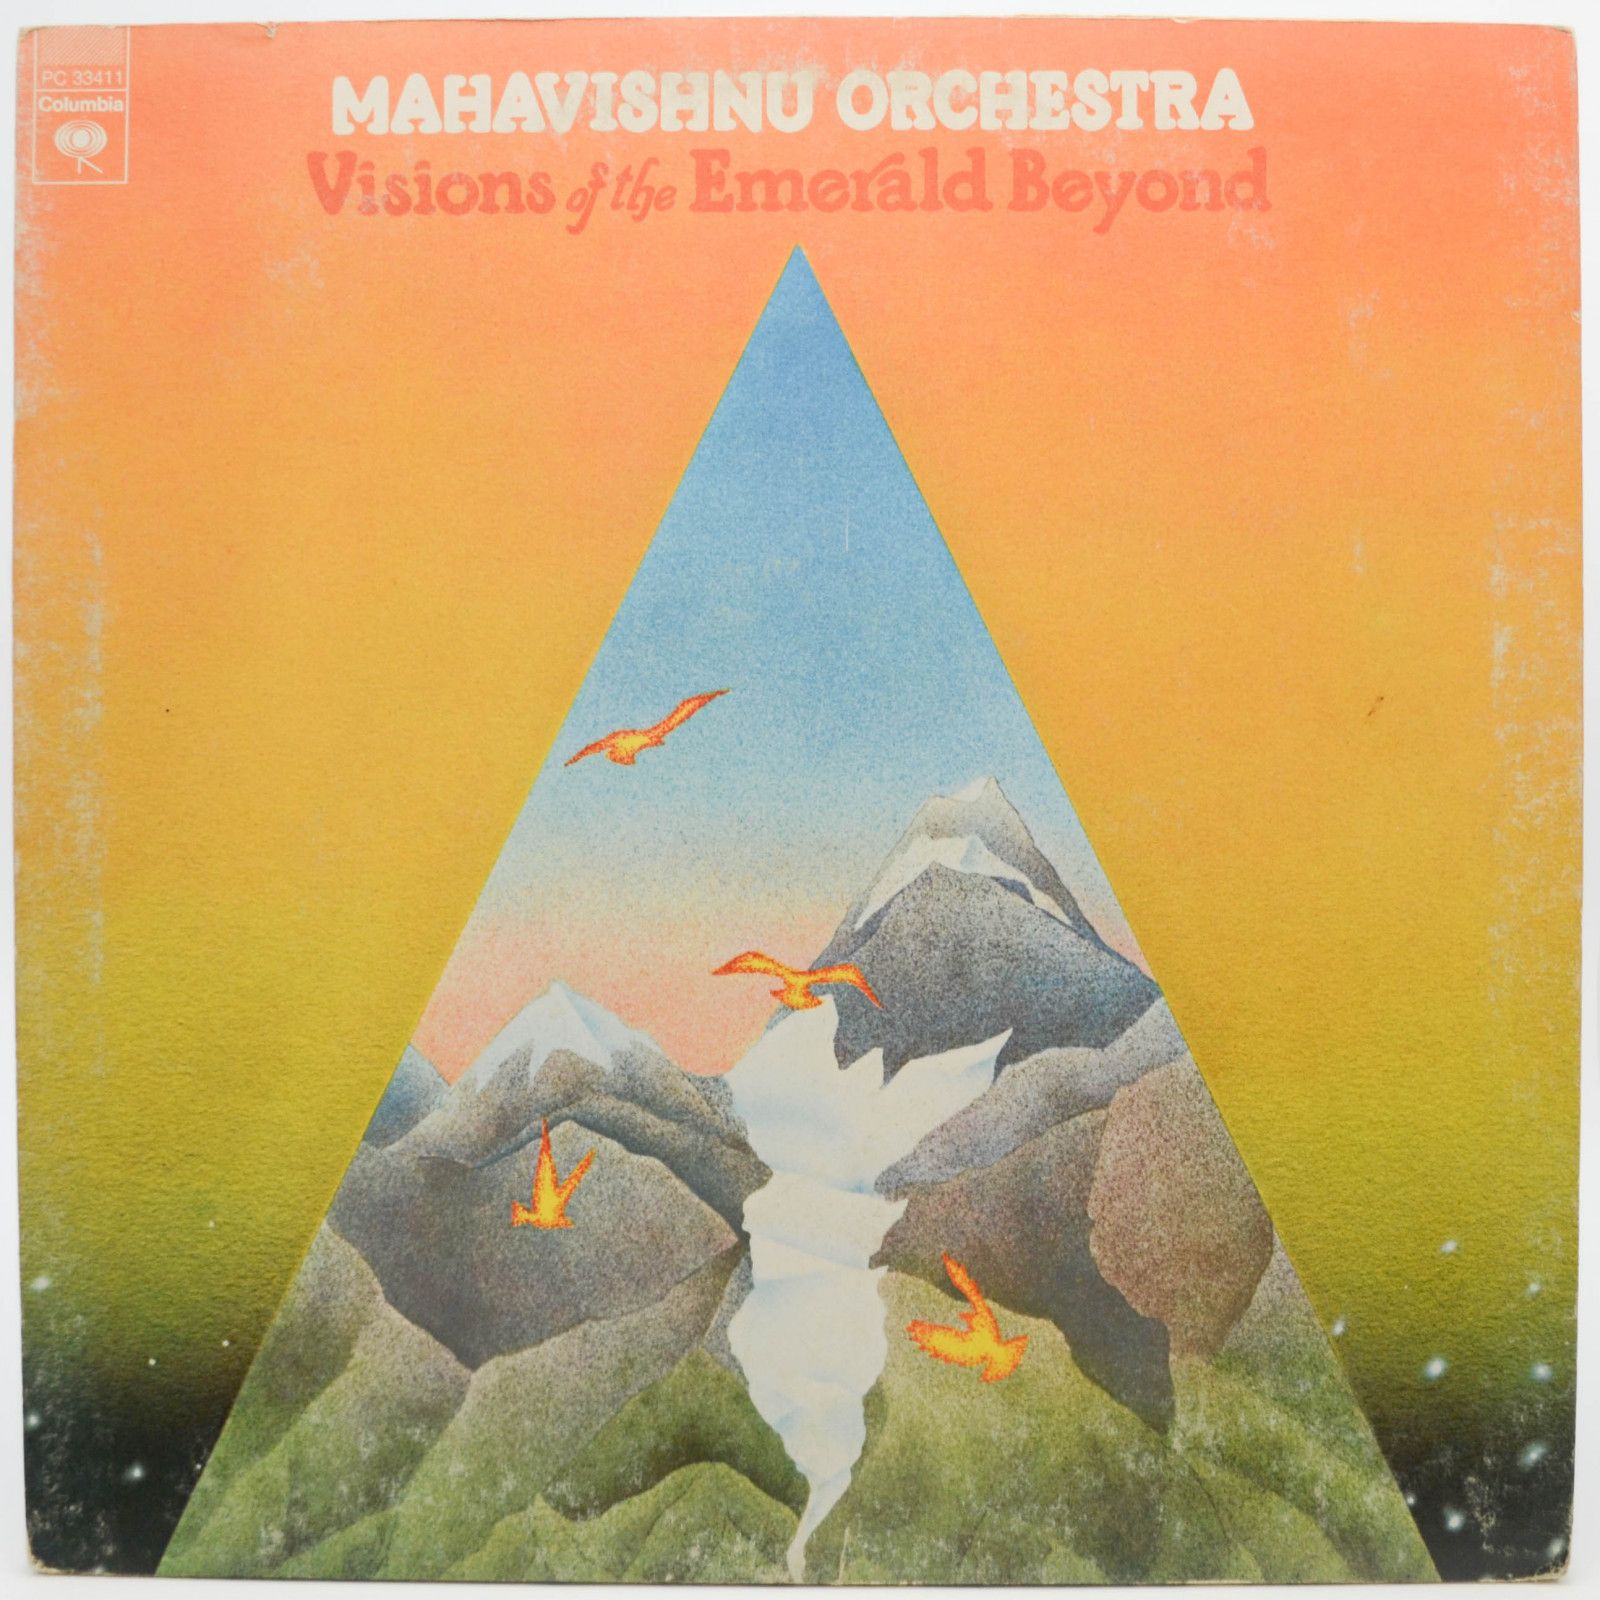 Mahavishnu Orchestra — Visions Of The Emerald Beyond (USA), 1975